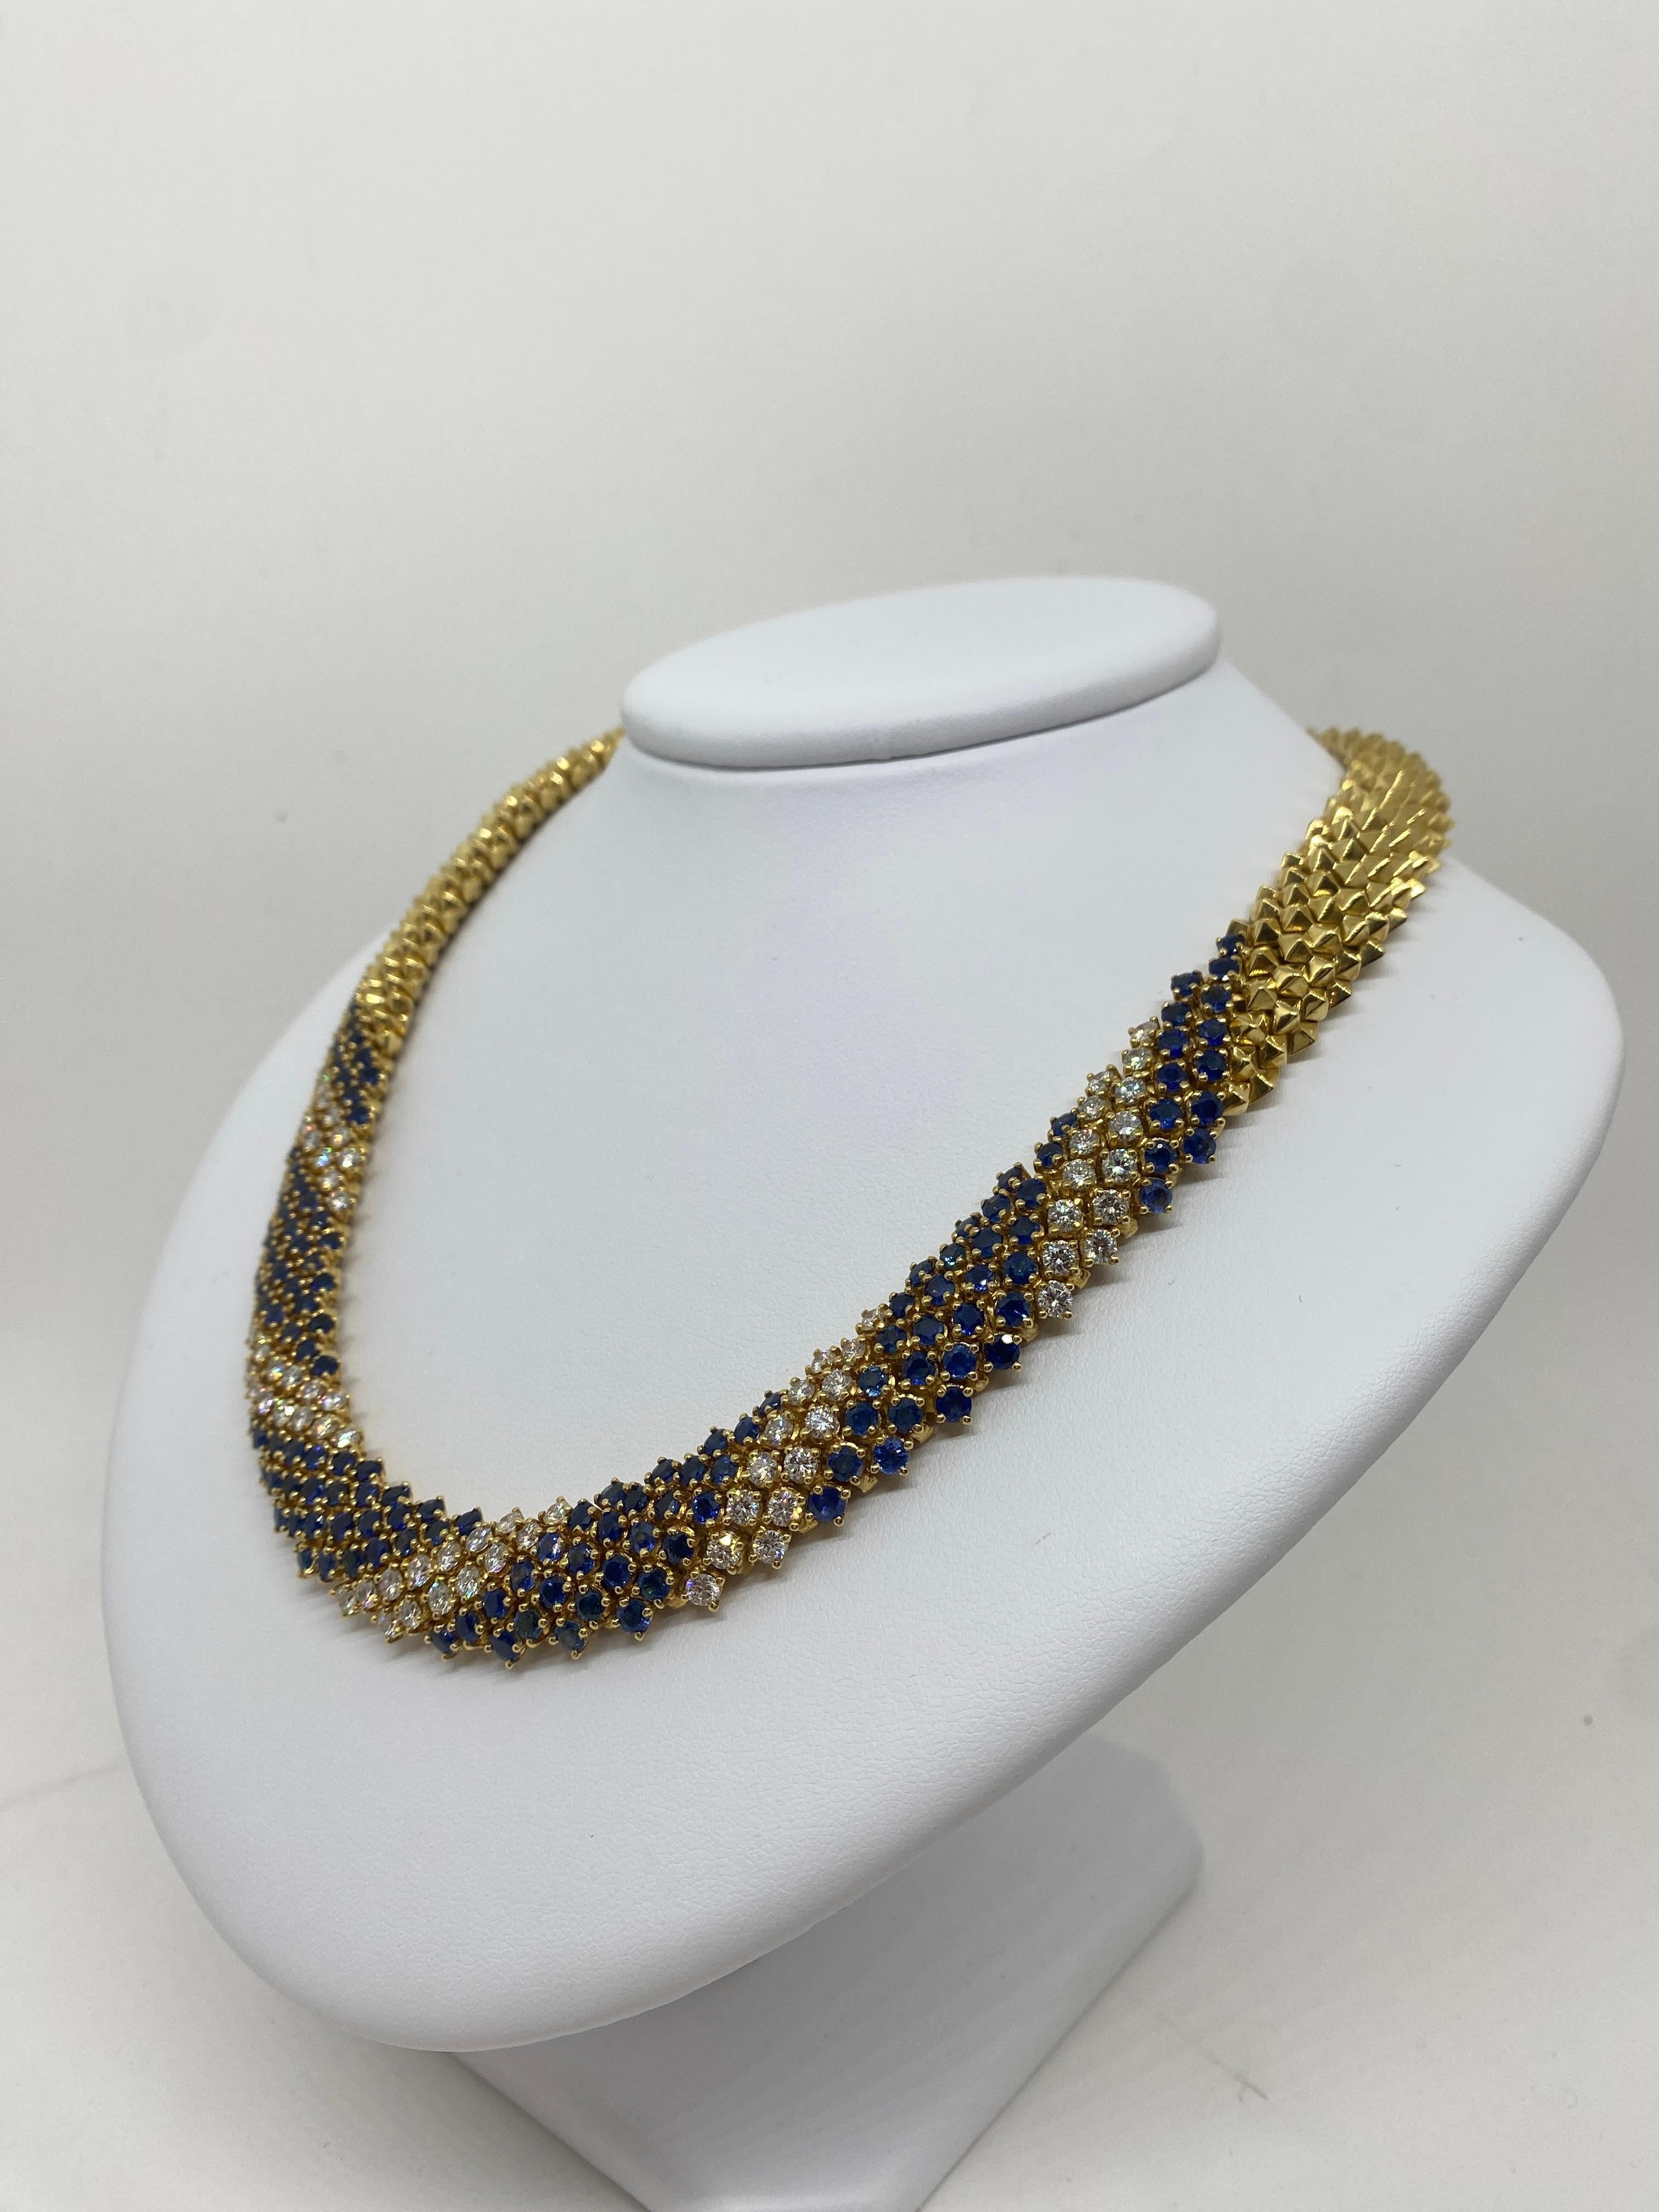 Brilliant Cut Unique Snake 18kt Yellow Gold Necklace 23 Ct Blue Sapphires 7.42 White Diamonds For Sale